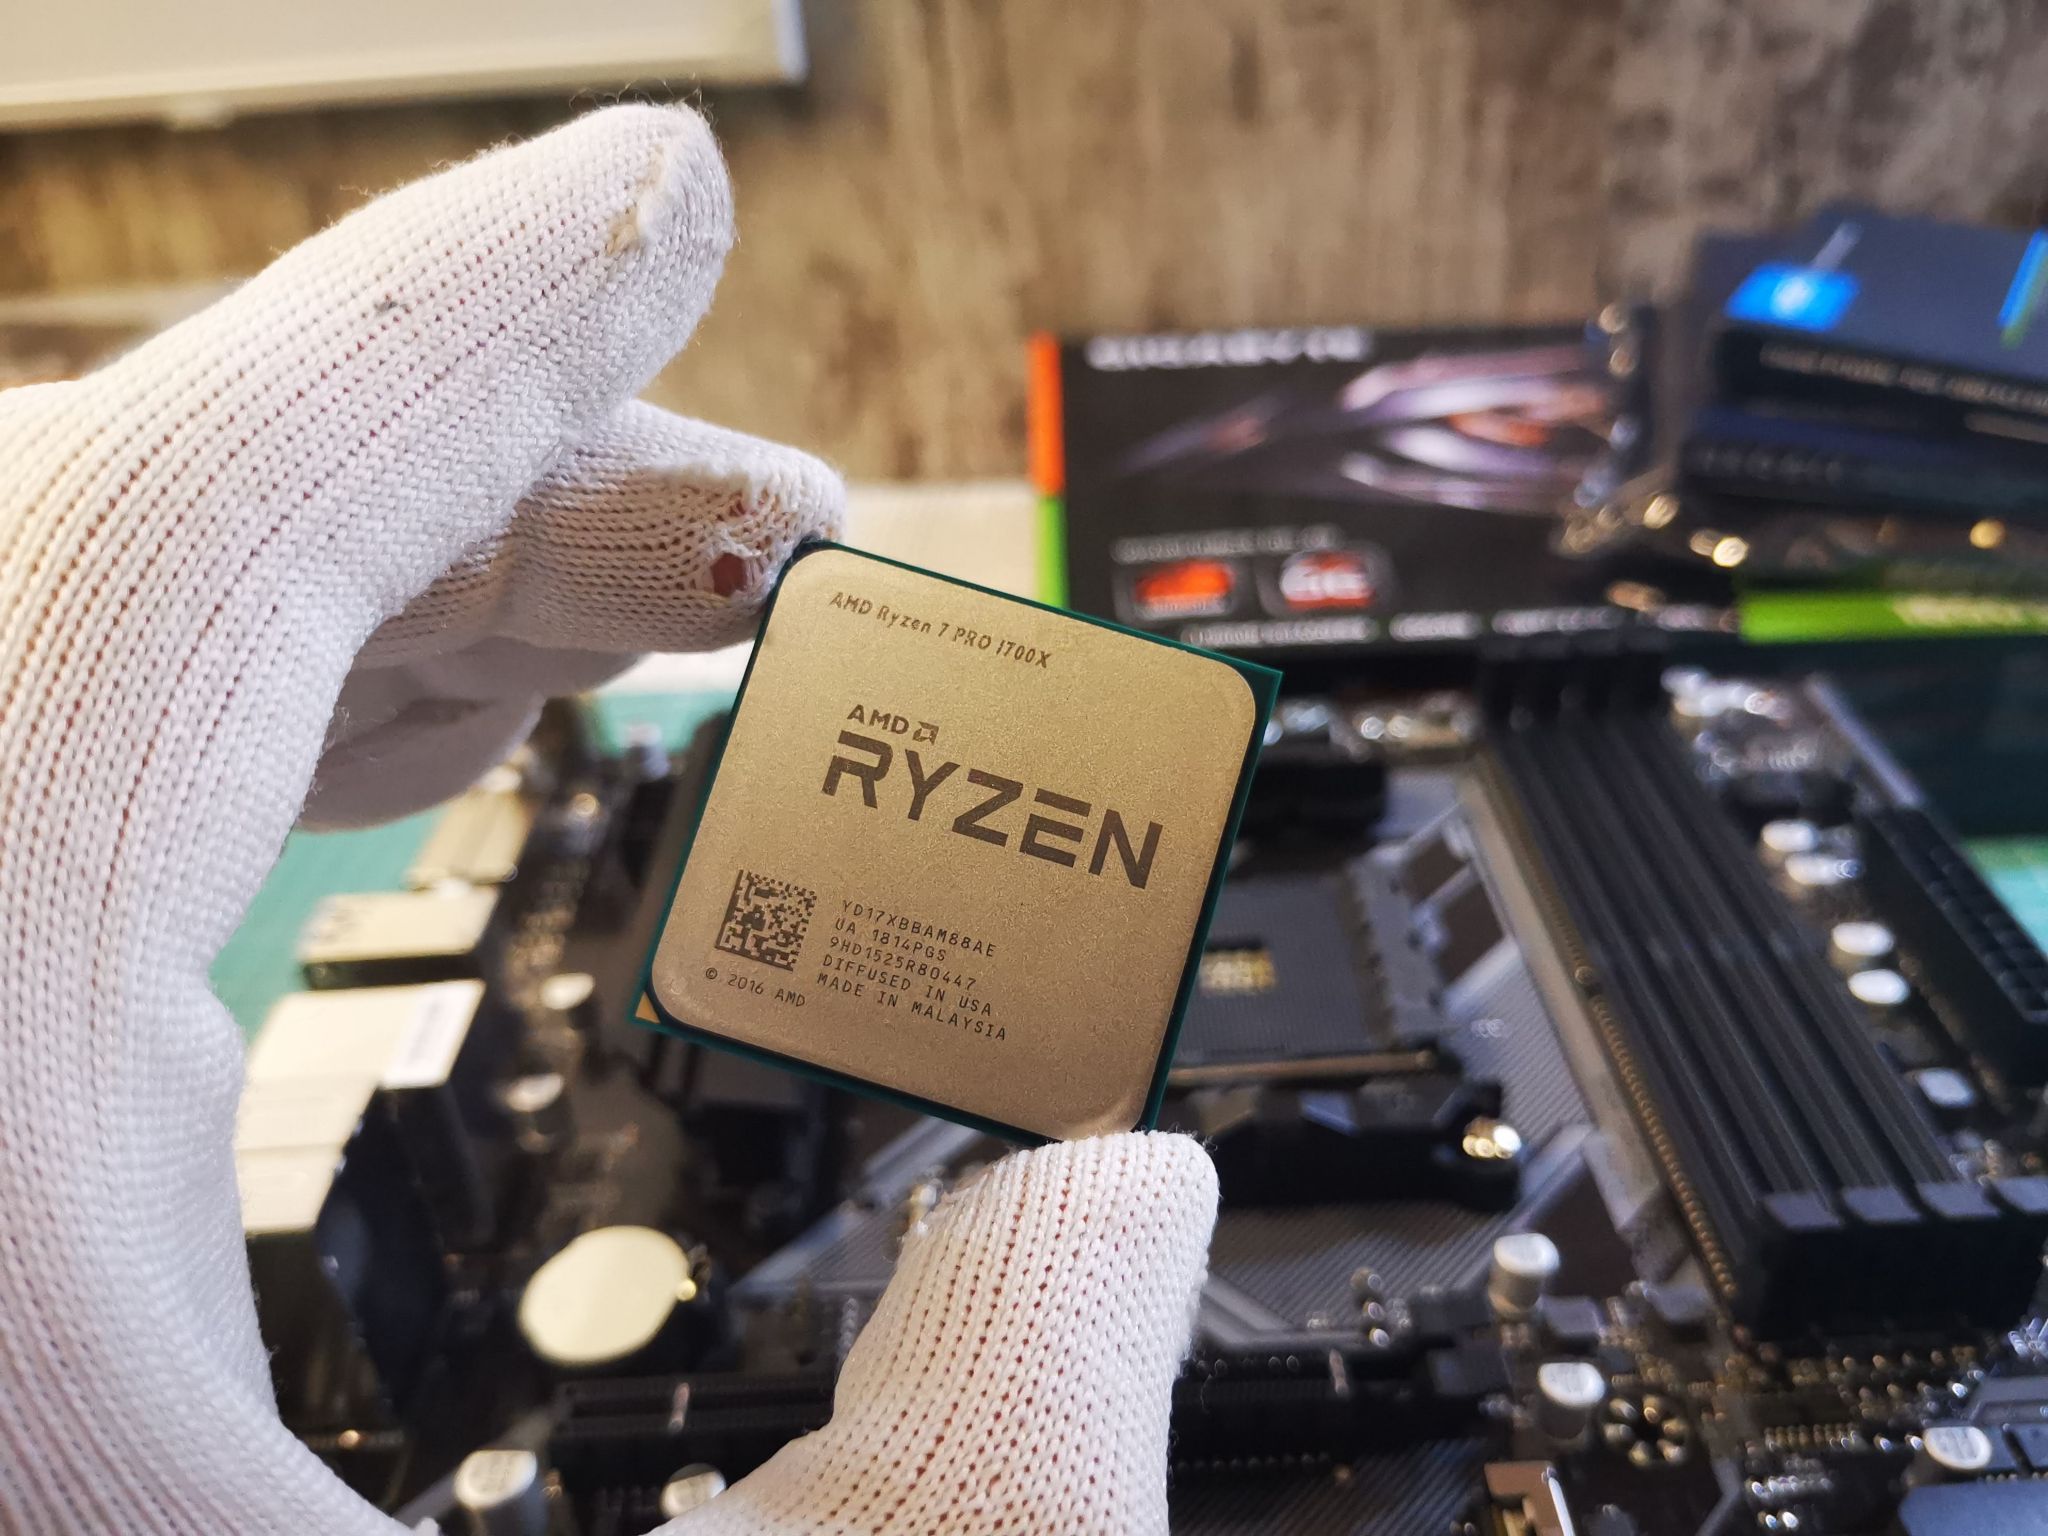 Сборка на 5 5600. Процессор AMD Ryzen 7 Pro. Процессор AMD Ryzen 7 Pro 1700. Процессор AMD Ryzen 5 5600g. AMD Ryzen 7 Pro 1700x Box.